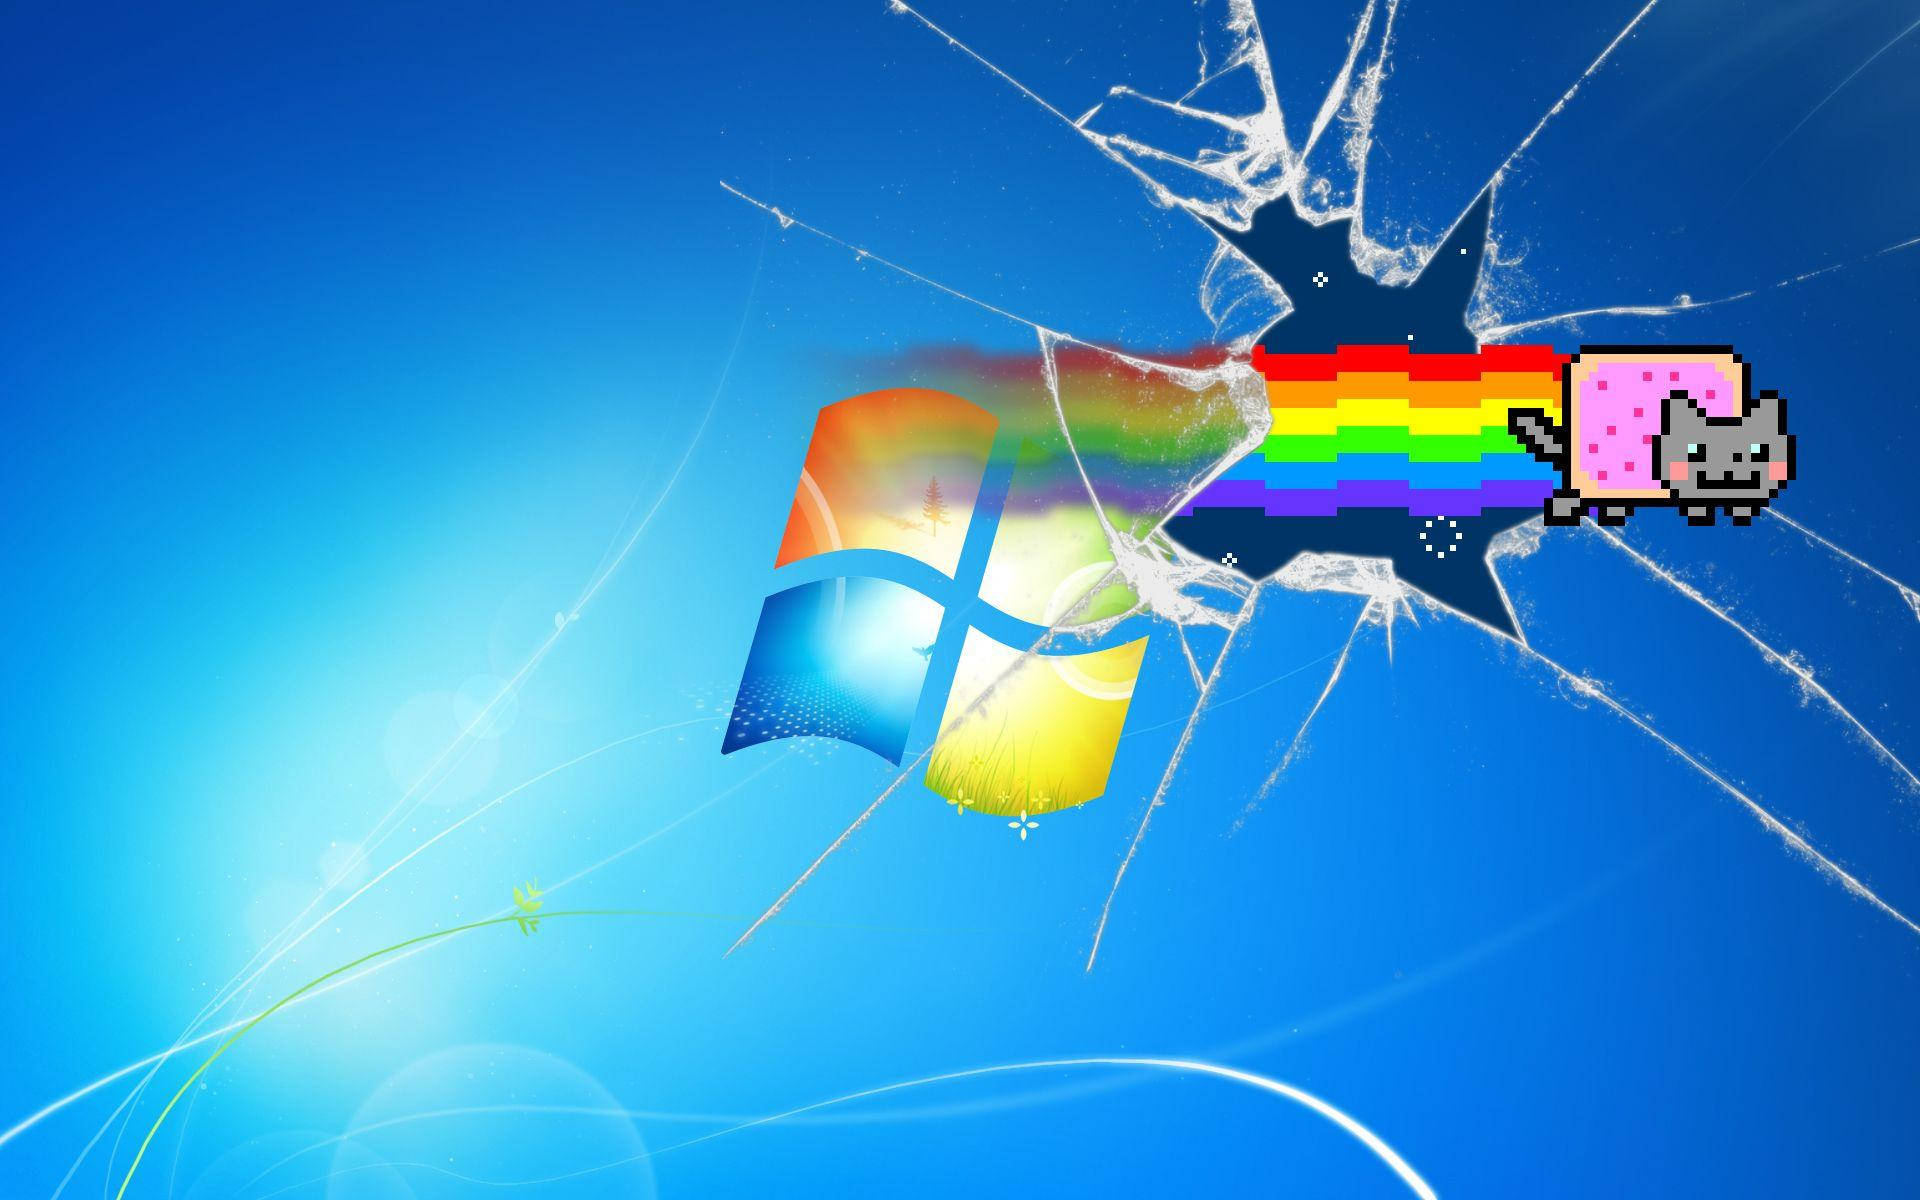 Windows 10 rainbow cat meme wallpaper